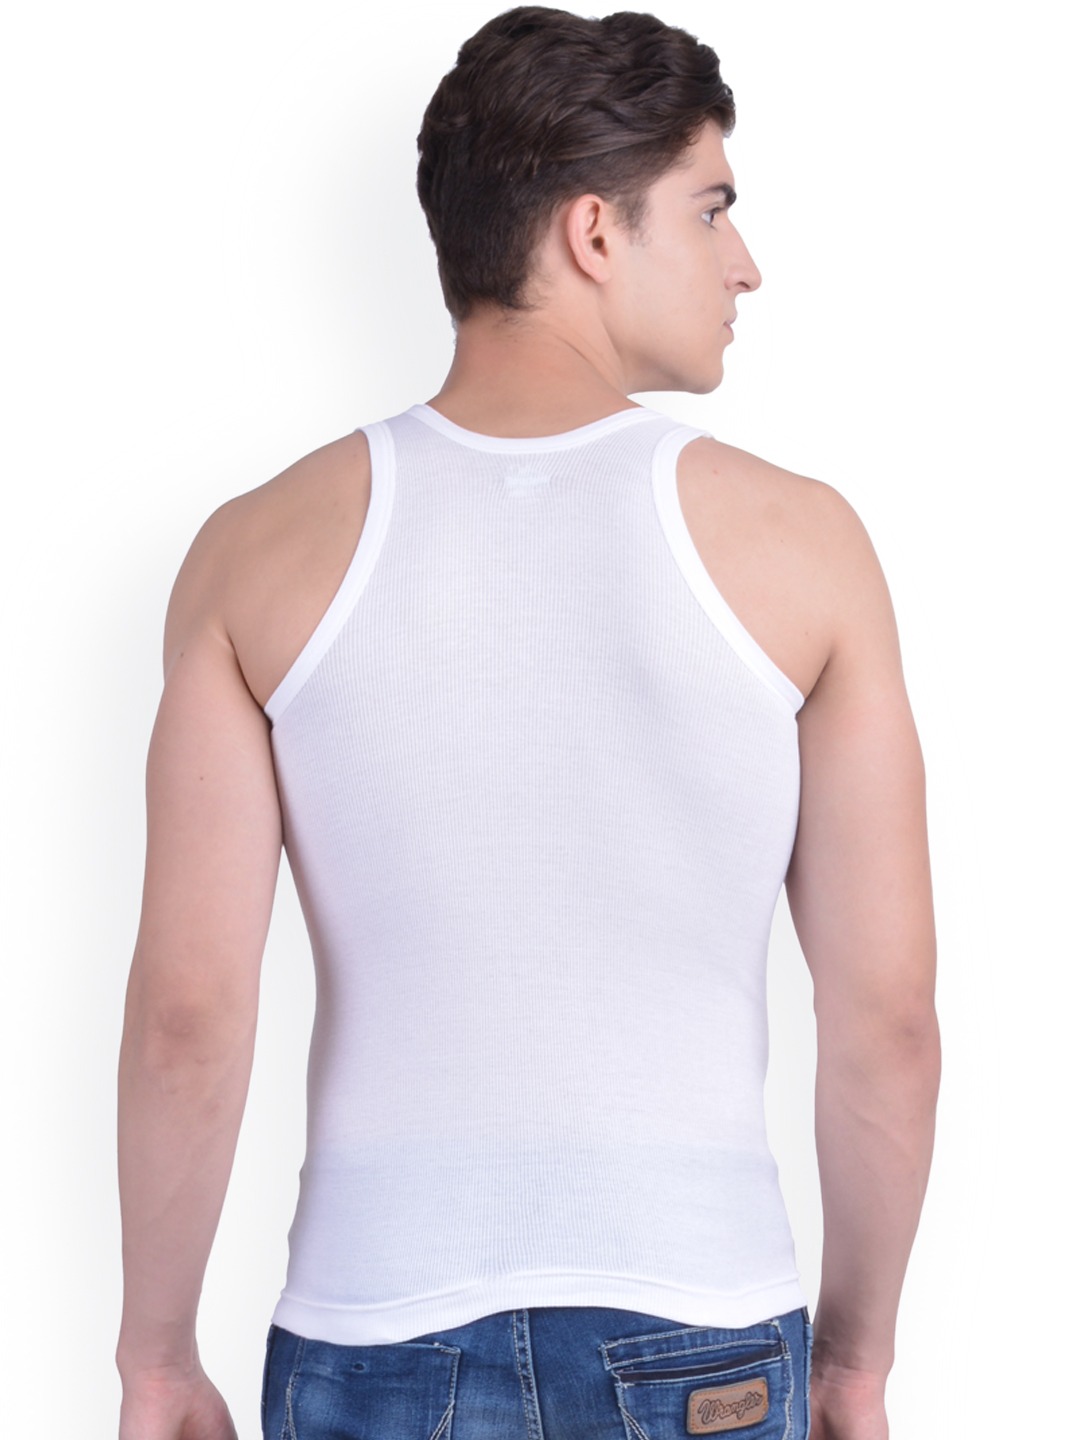 Clothing Innerwear Vests | Dollar Bigboss Pack of 2 White Innerwear Vests MDVE-04-R1-PO2 - VY69546